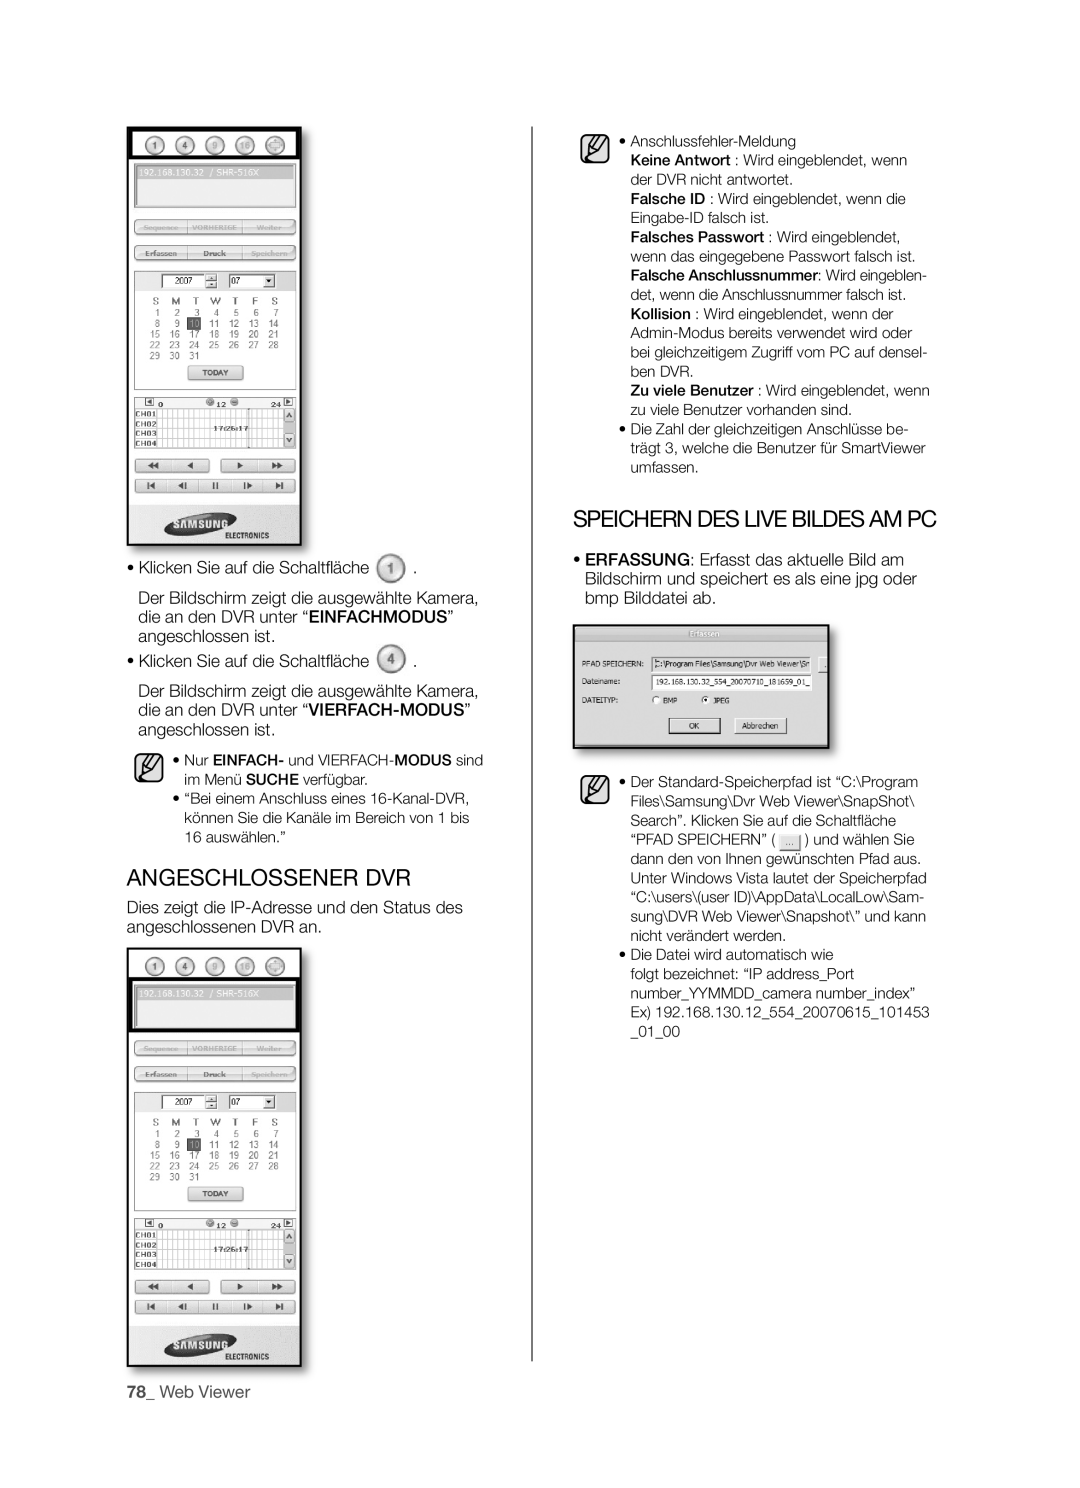 Samsung SHR-5082P/XEG, SHR-5160P, SHR-5162P/XEG manual Angeschlossener Dvr, Speichern Des Live Bildes Am Pc, Web Viewer 